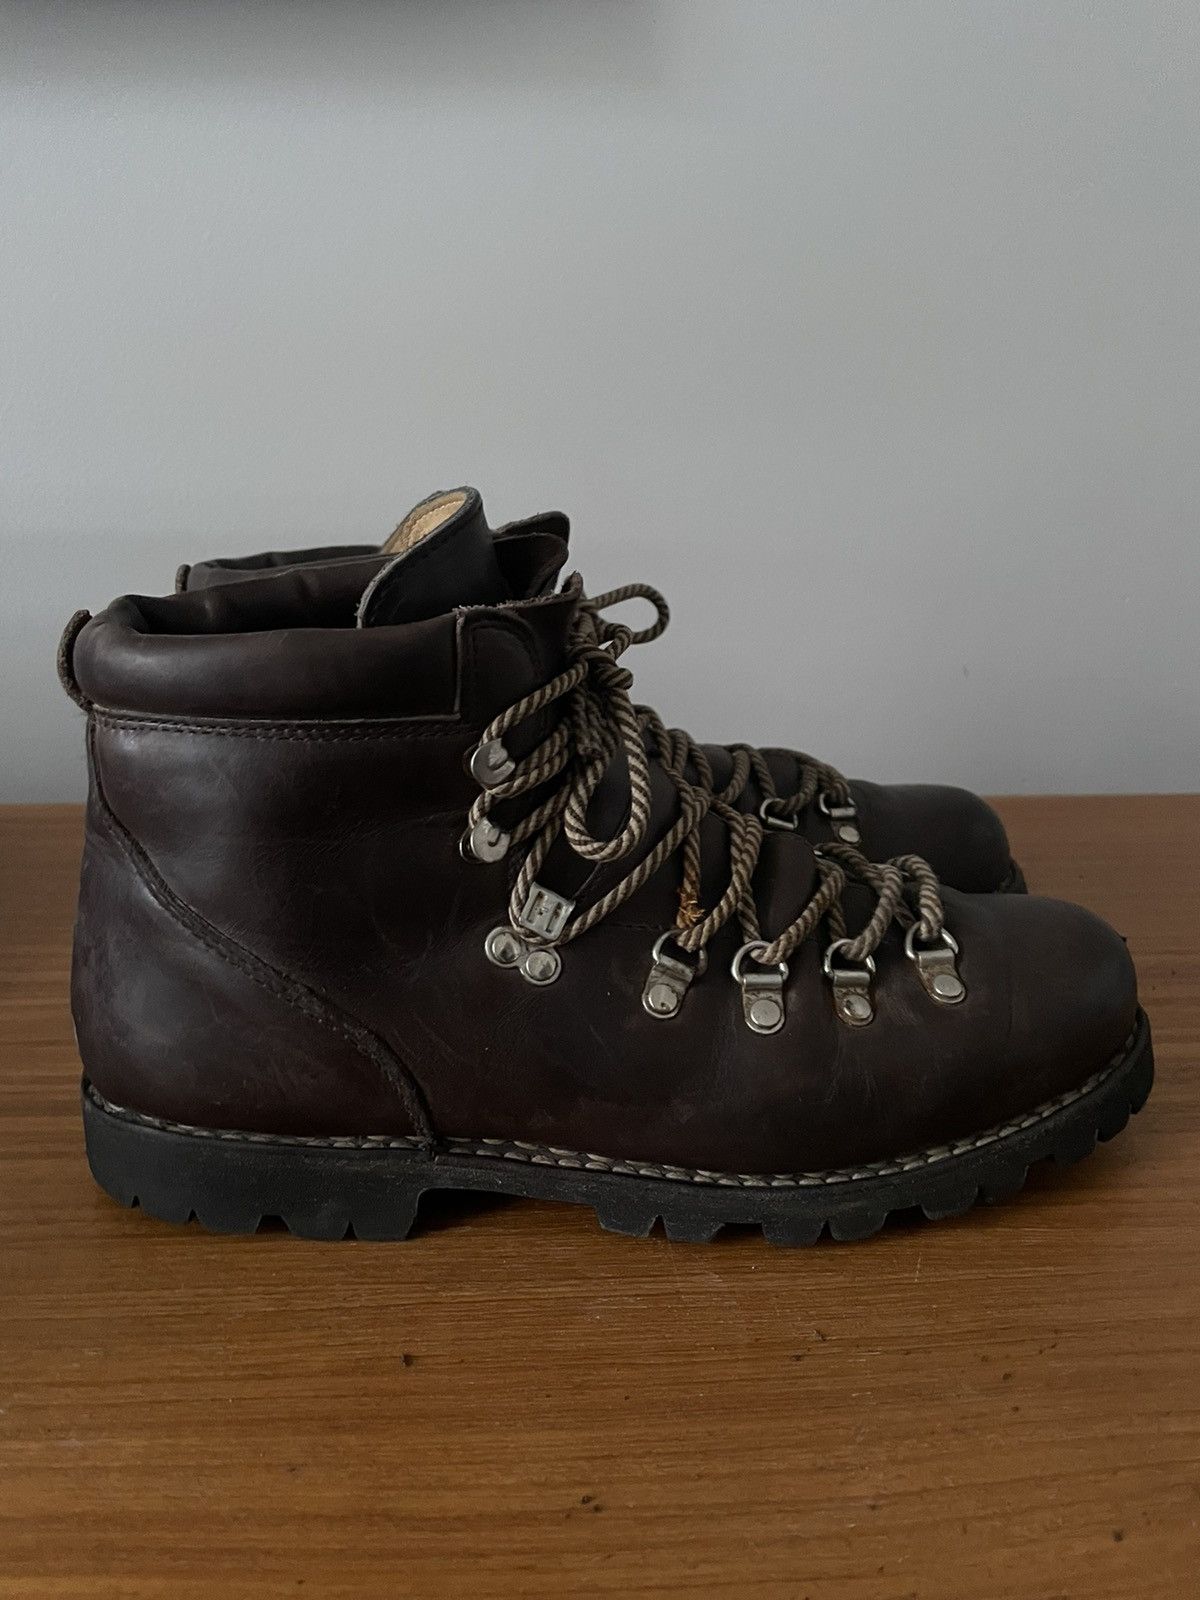 Paraboot Avioraz/Jannu Leather Hiking Boot Size US 8 / EU 41 - 5 Thumbnail